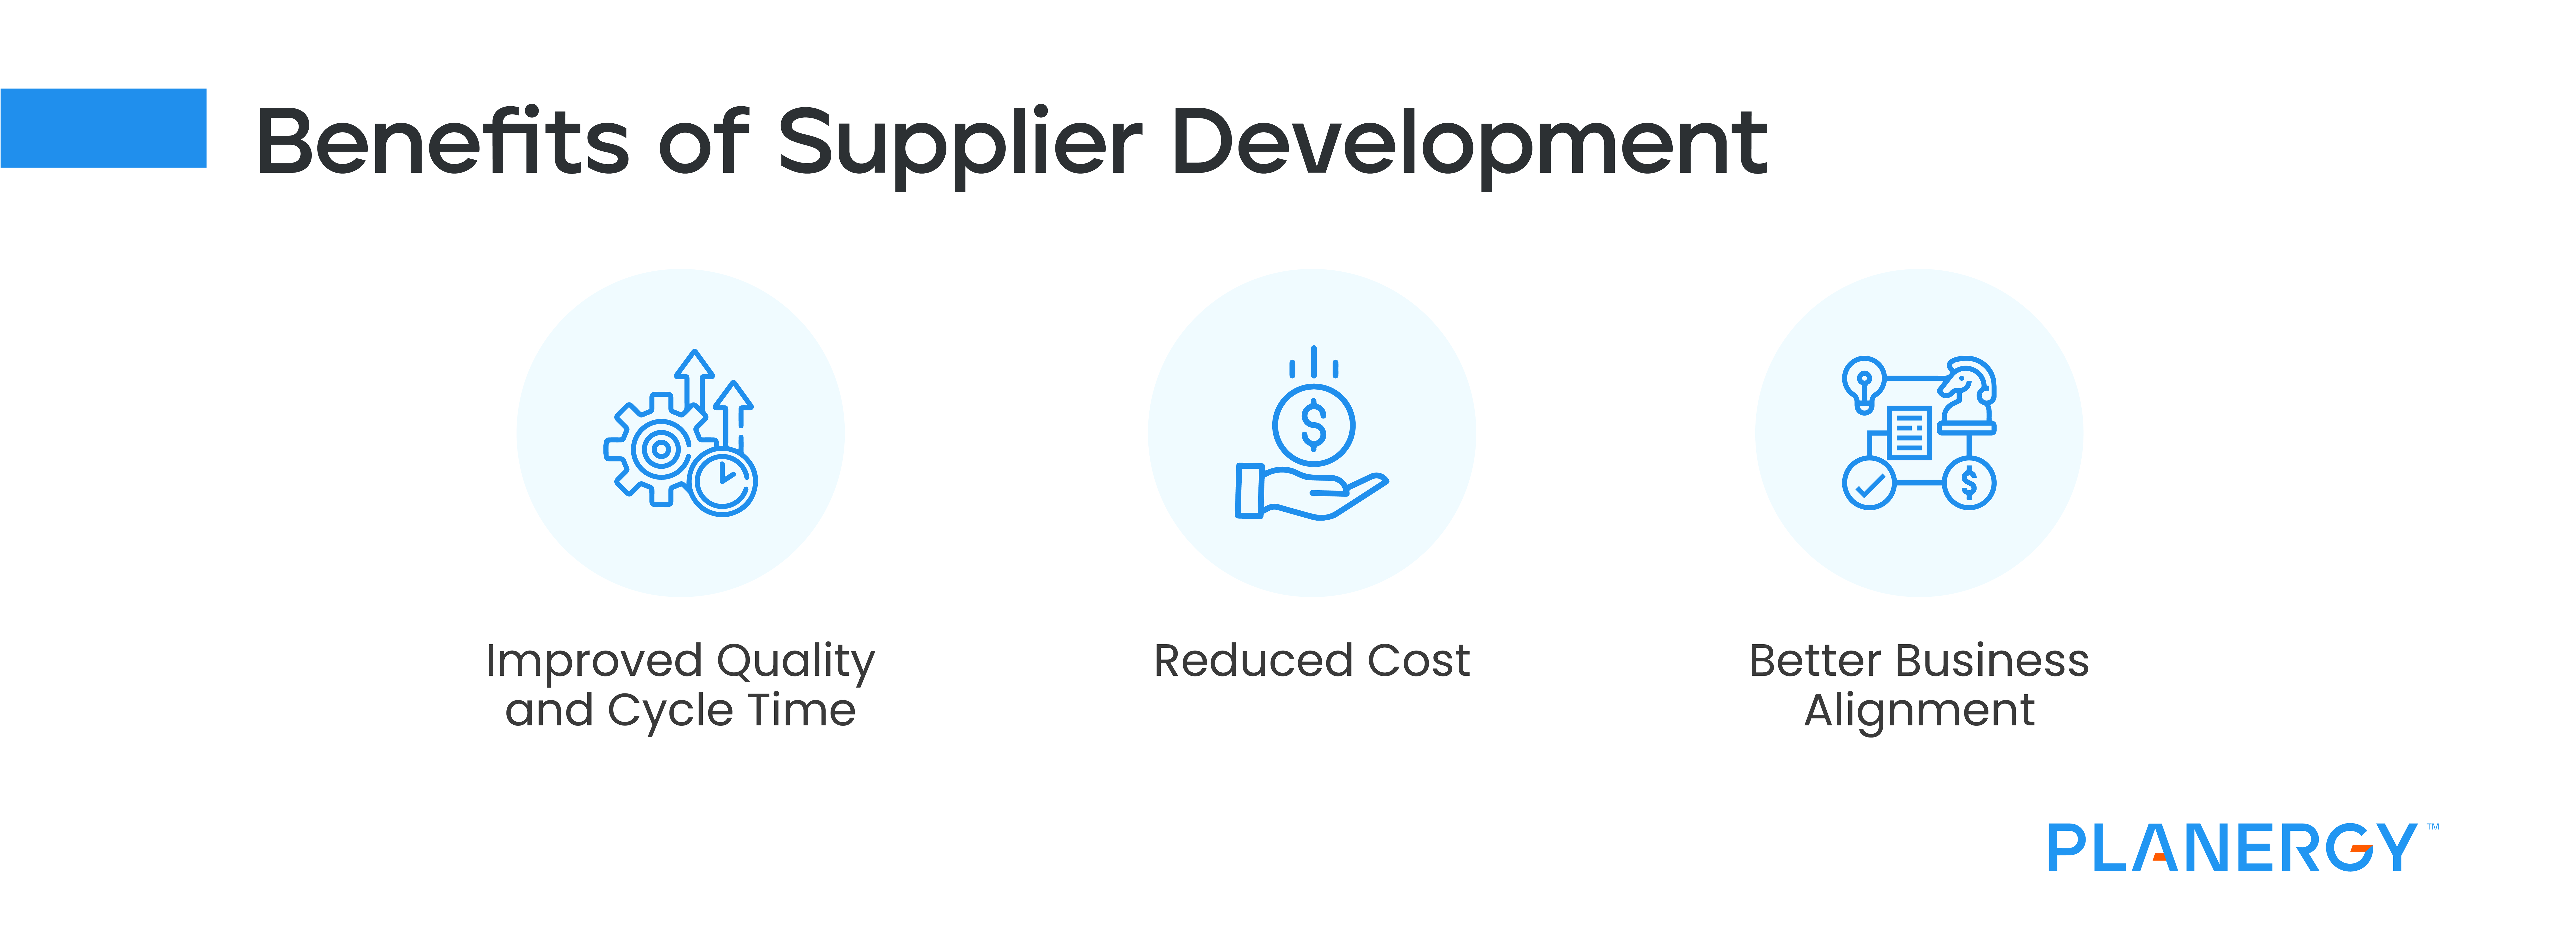 Benefits of Supplier Development